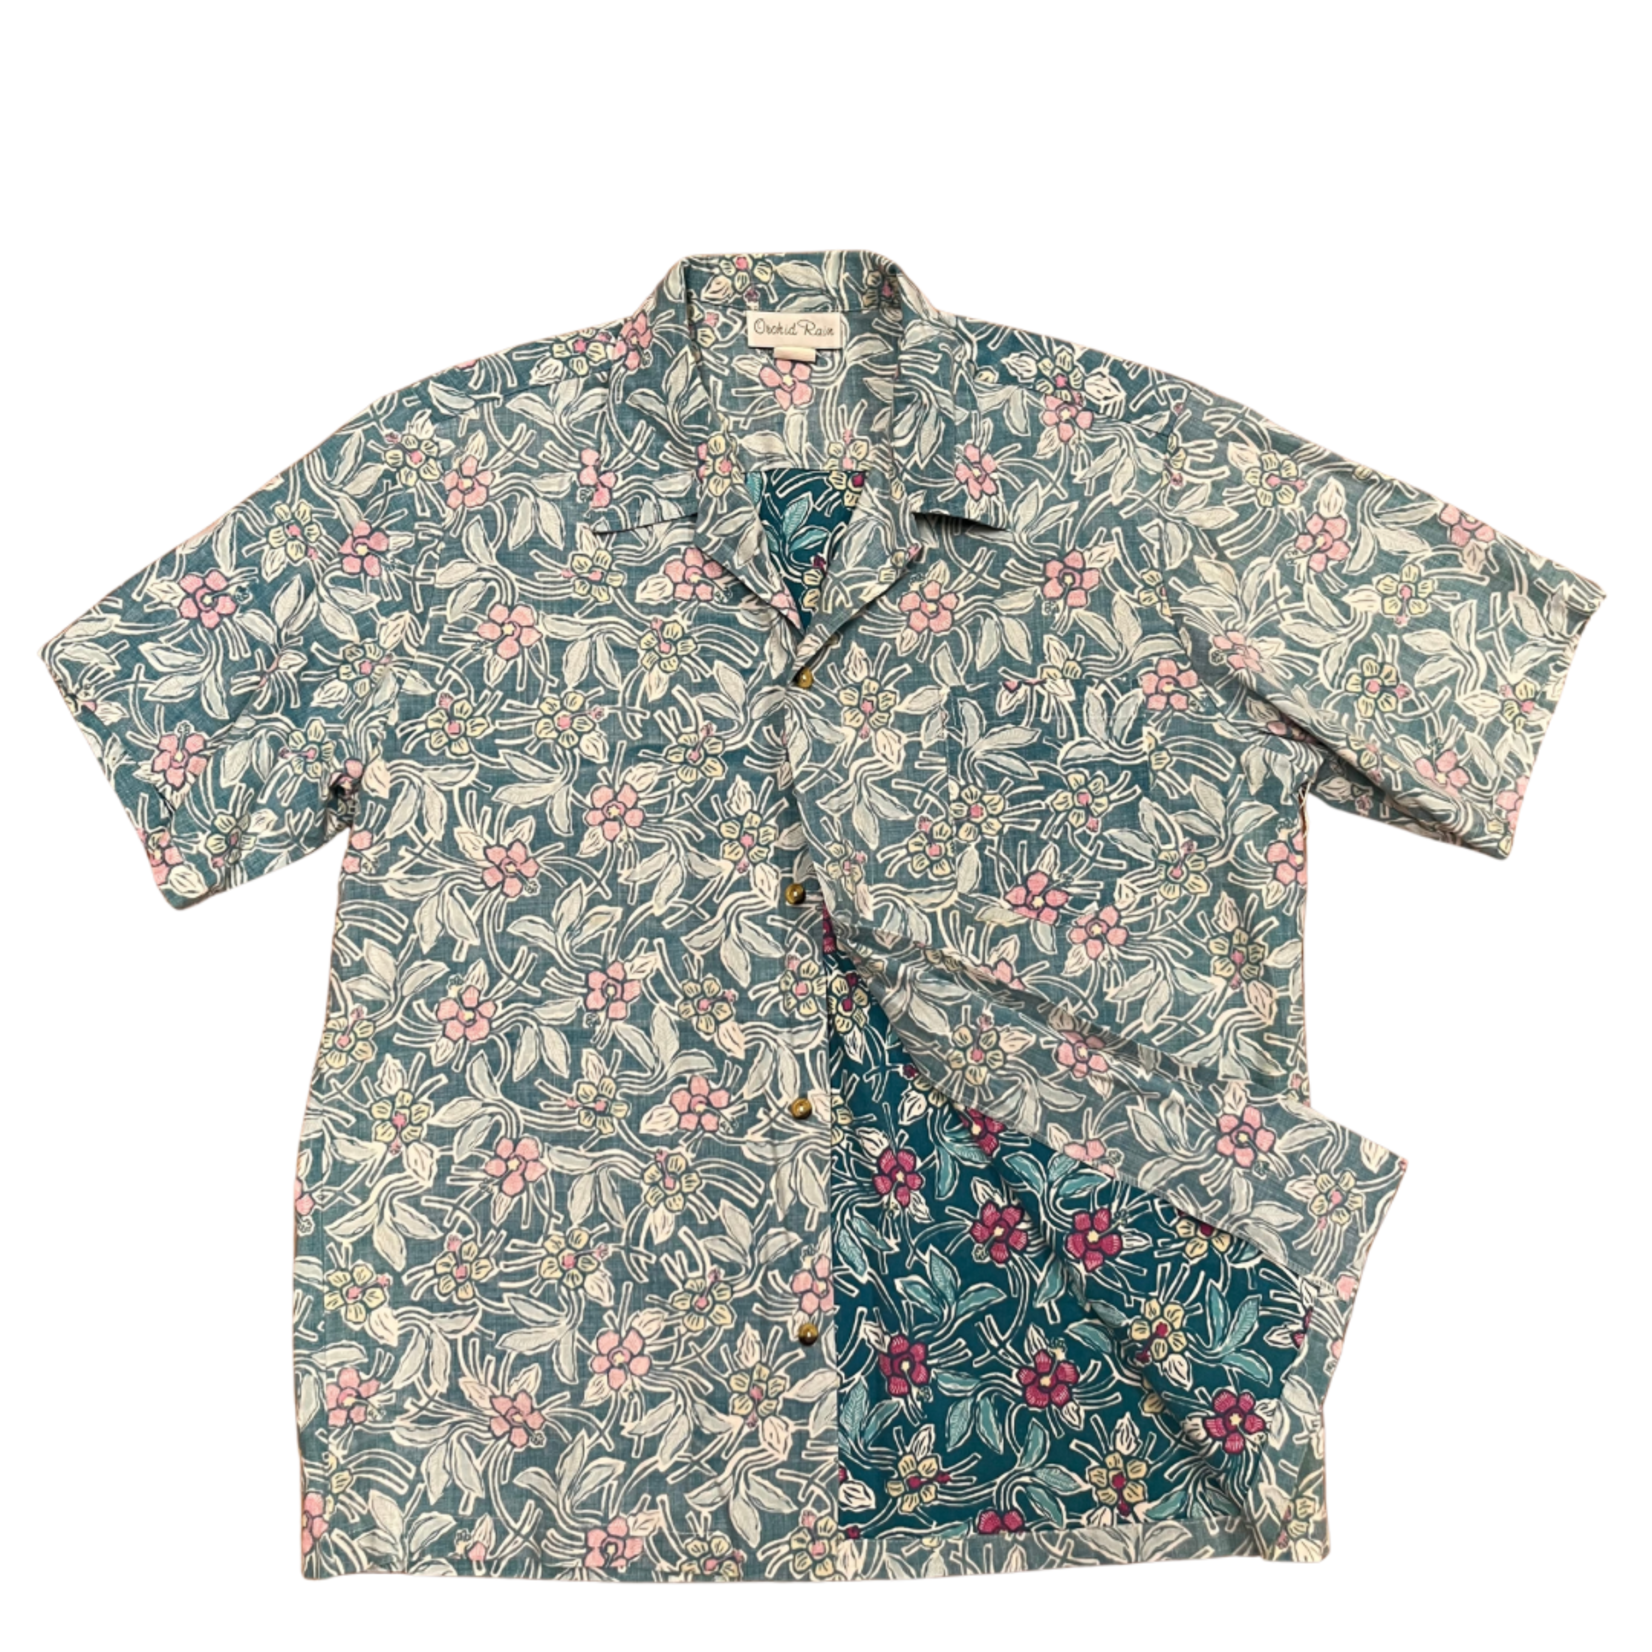 Mission Zero Men’s Vintage Aloha Shirt - Orchid Rain - Teal Tropical Flower - Lg